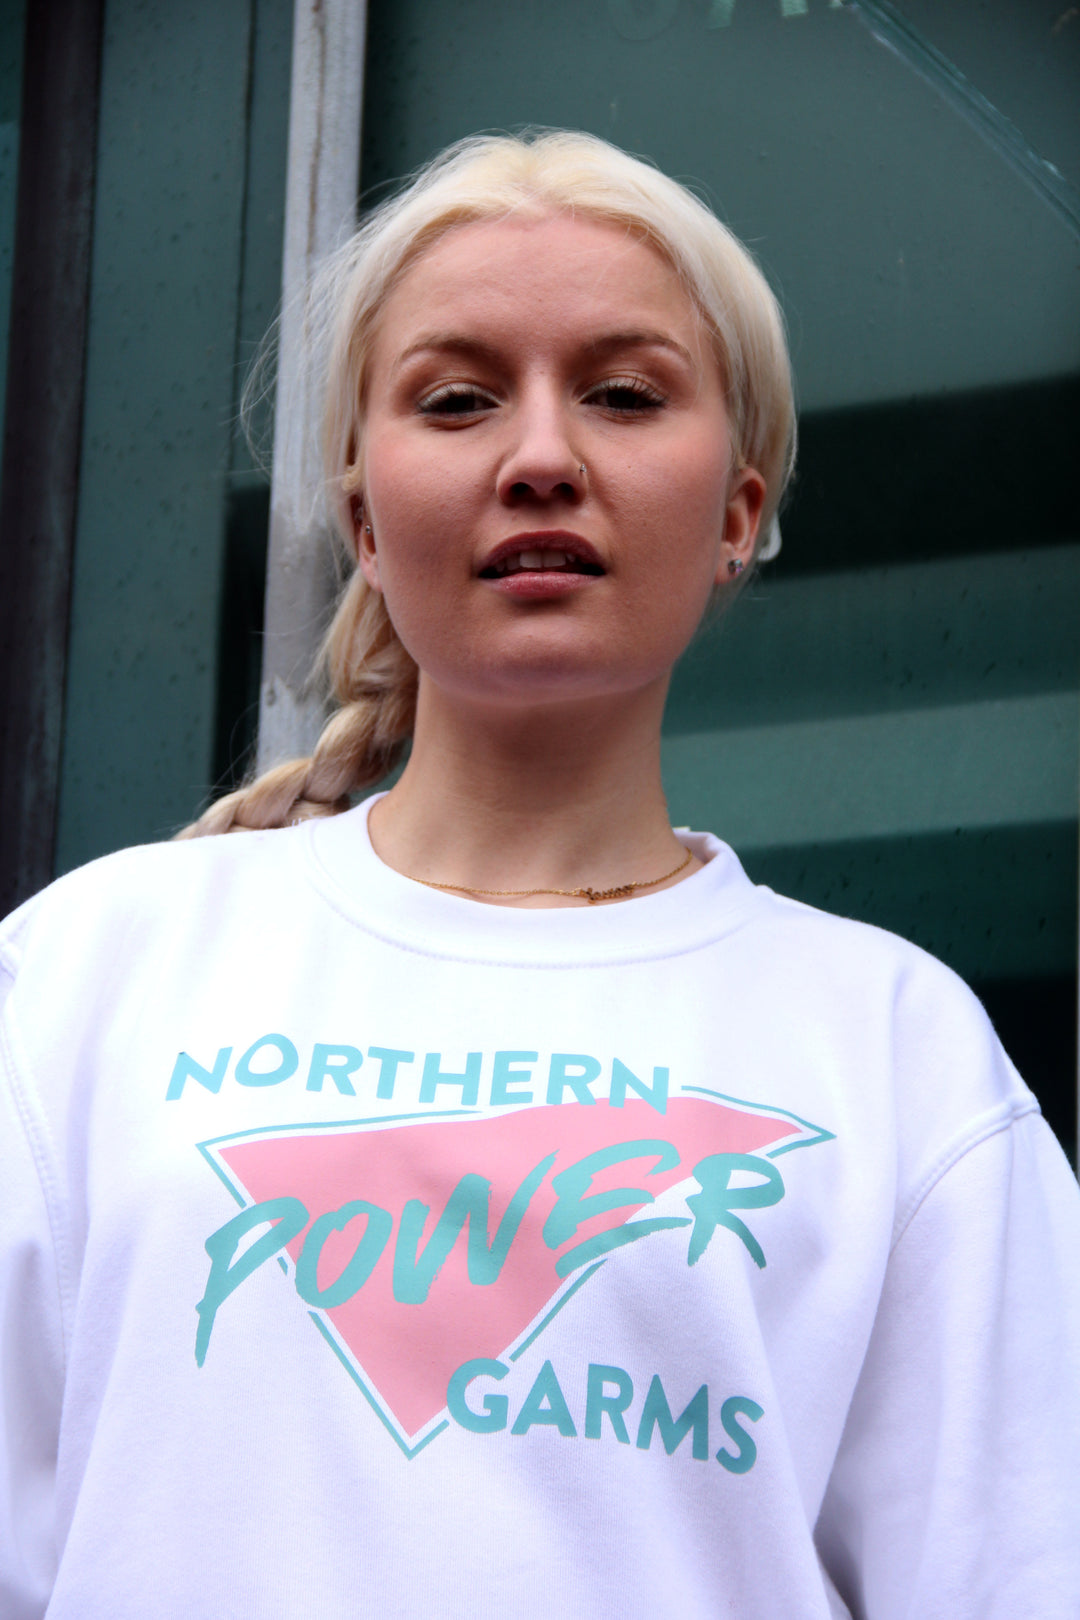 Northern Power Garms Sweater